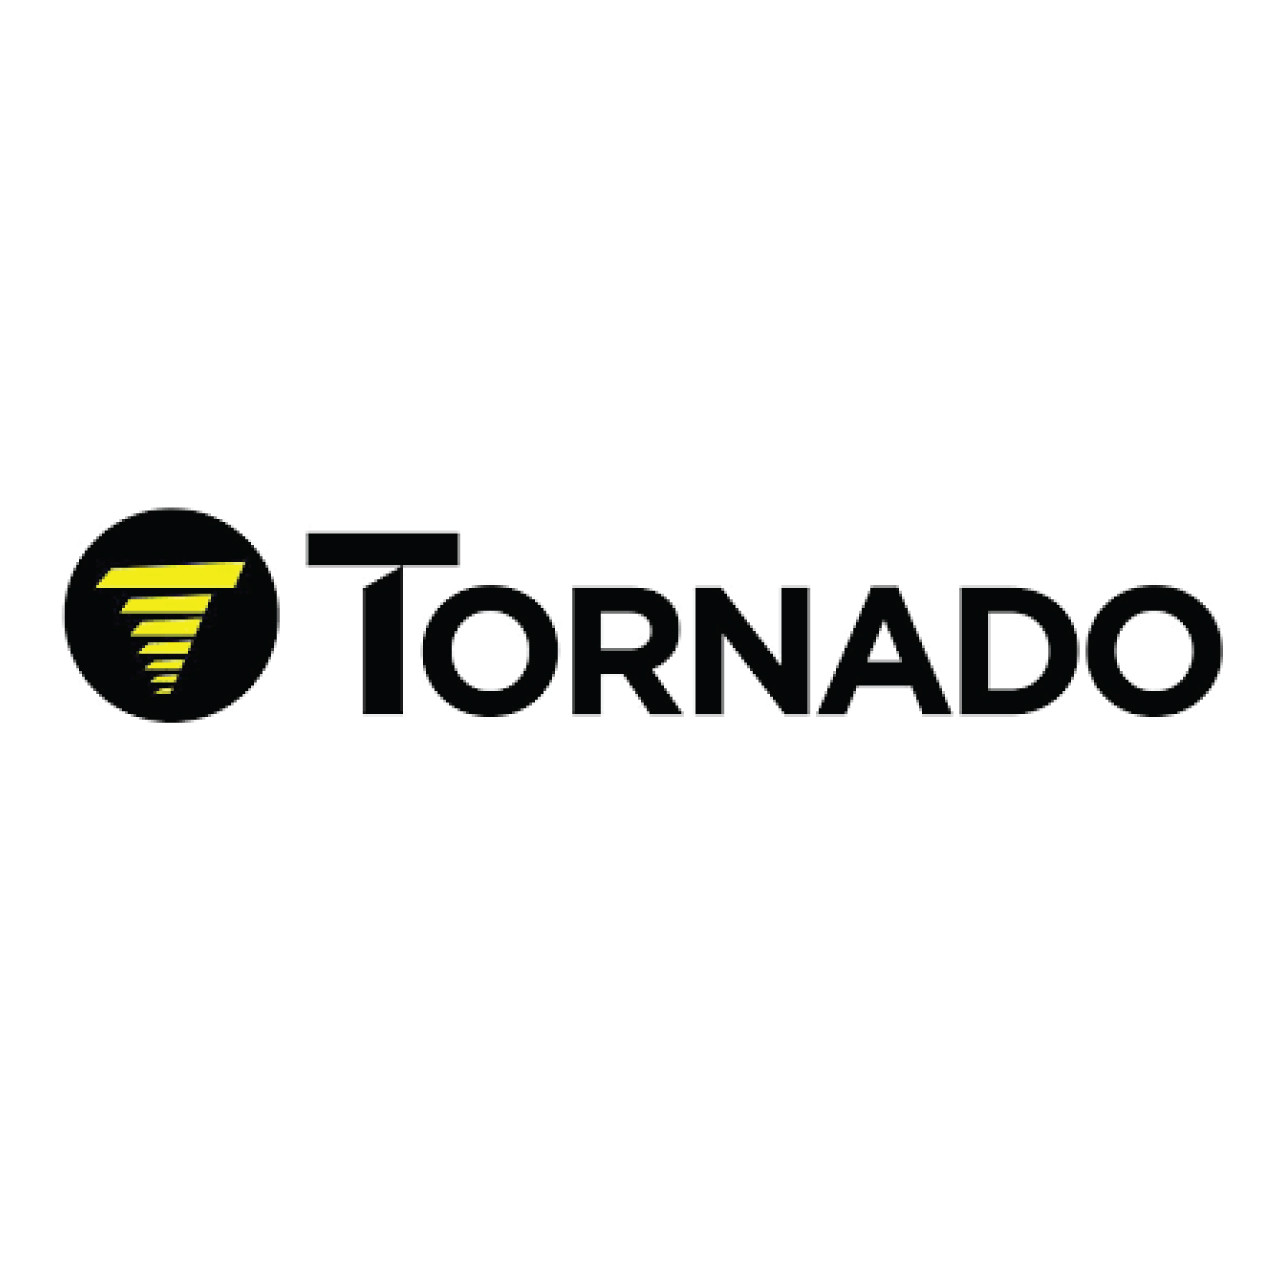 Tornado 20201010 - Drive Motor Bracket BD 22 and Orb 20 pic